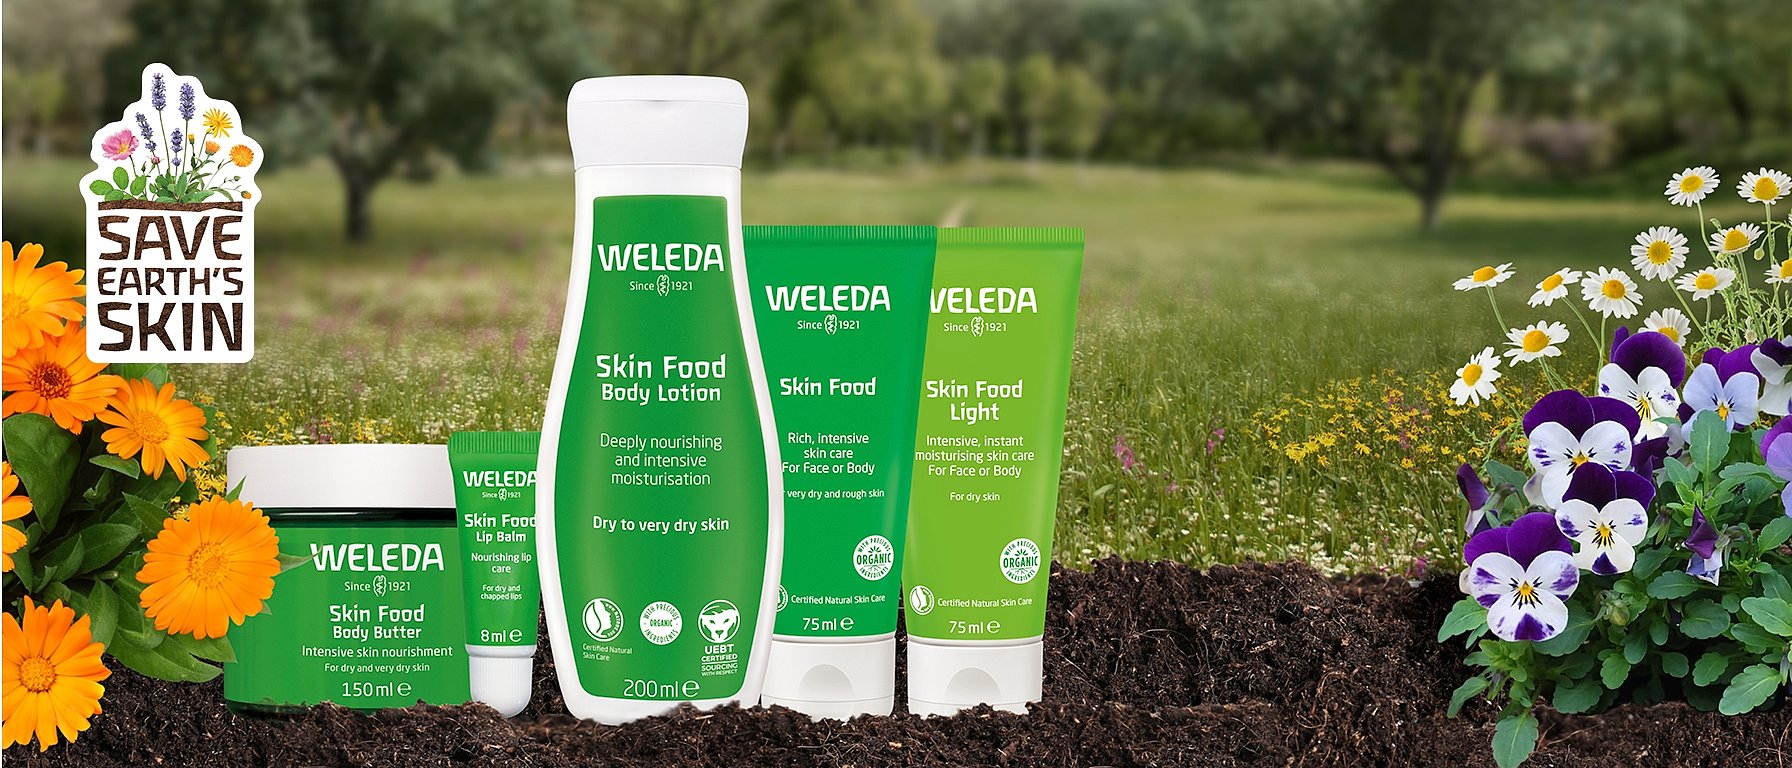 Weleda Skin Food products